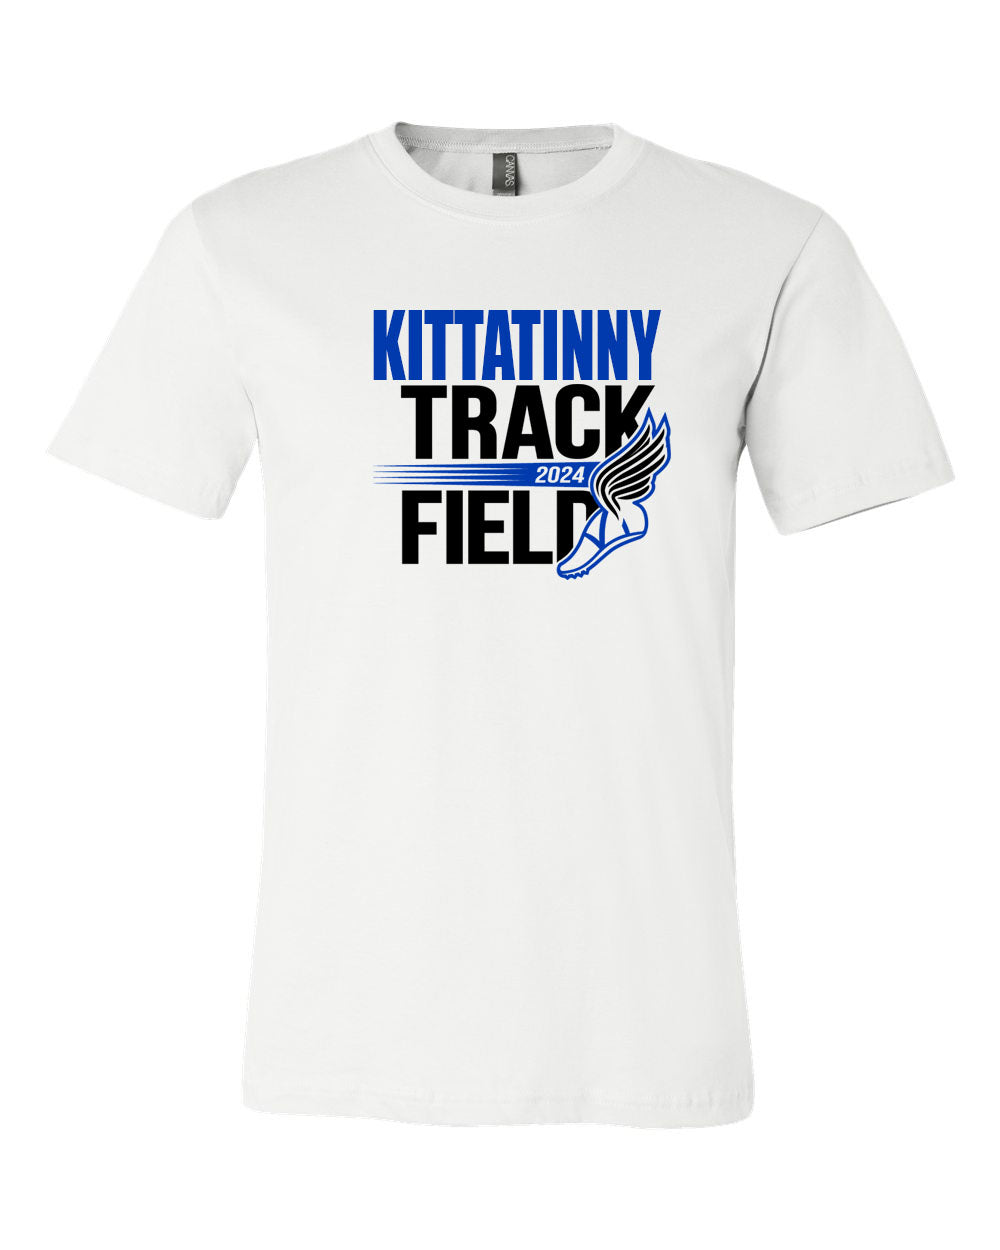 Kittatinny Track design 6 T-Shirt